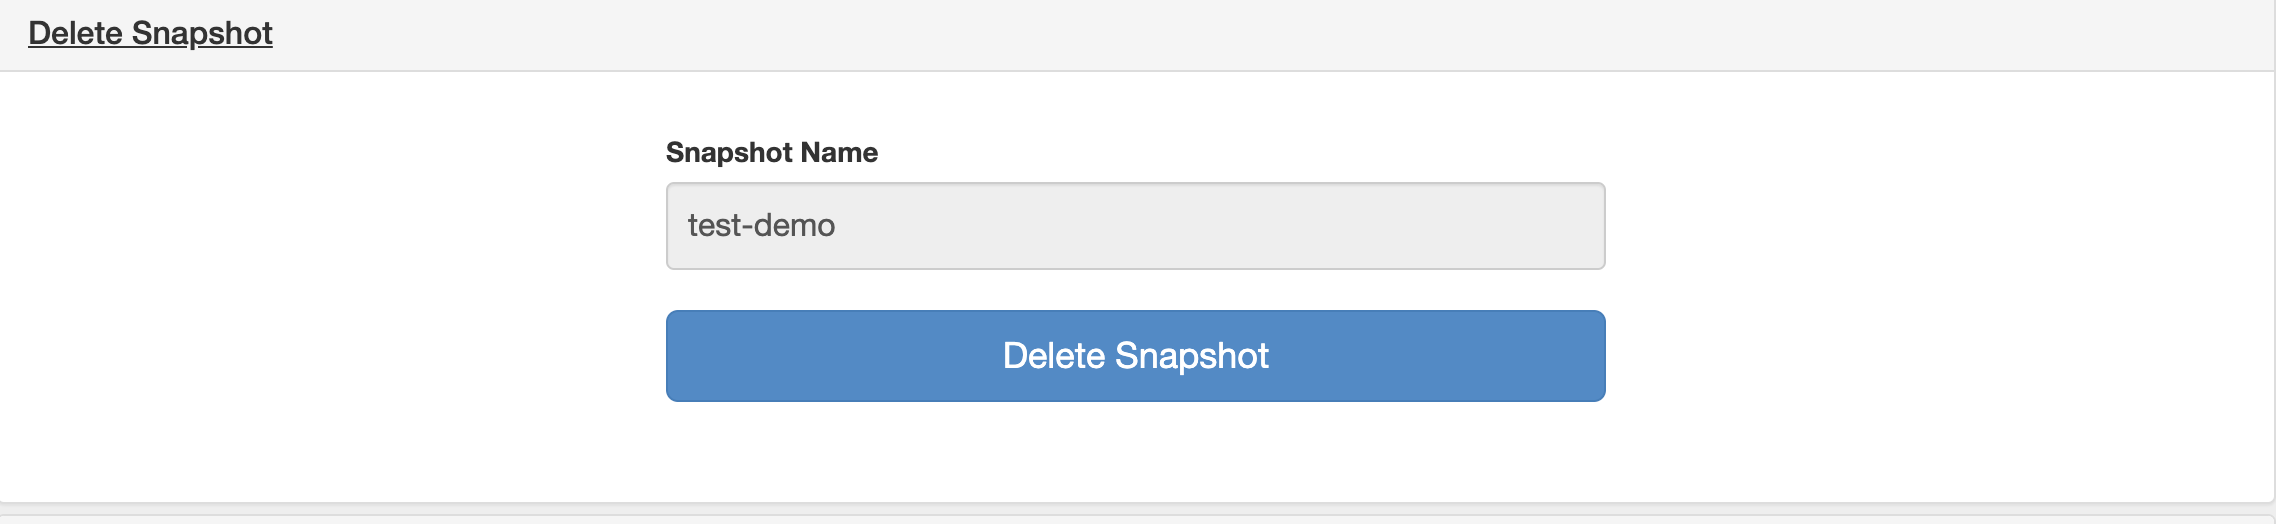 Delete Snapshot Form